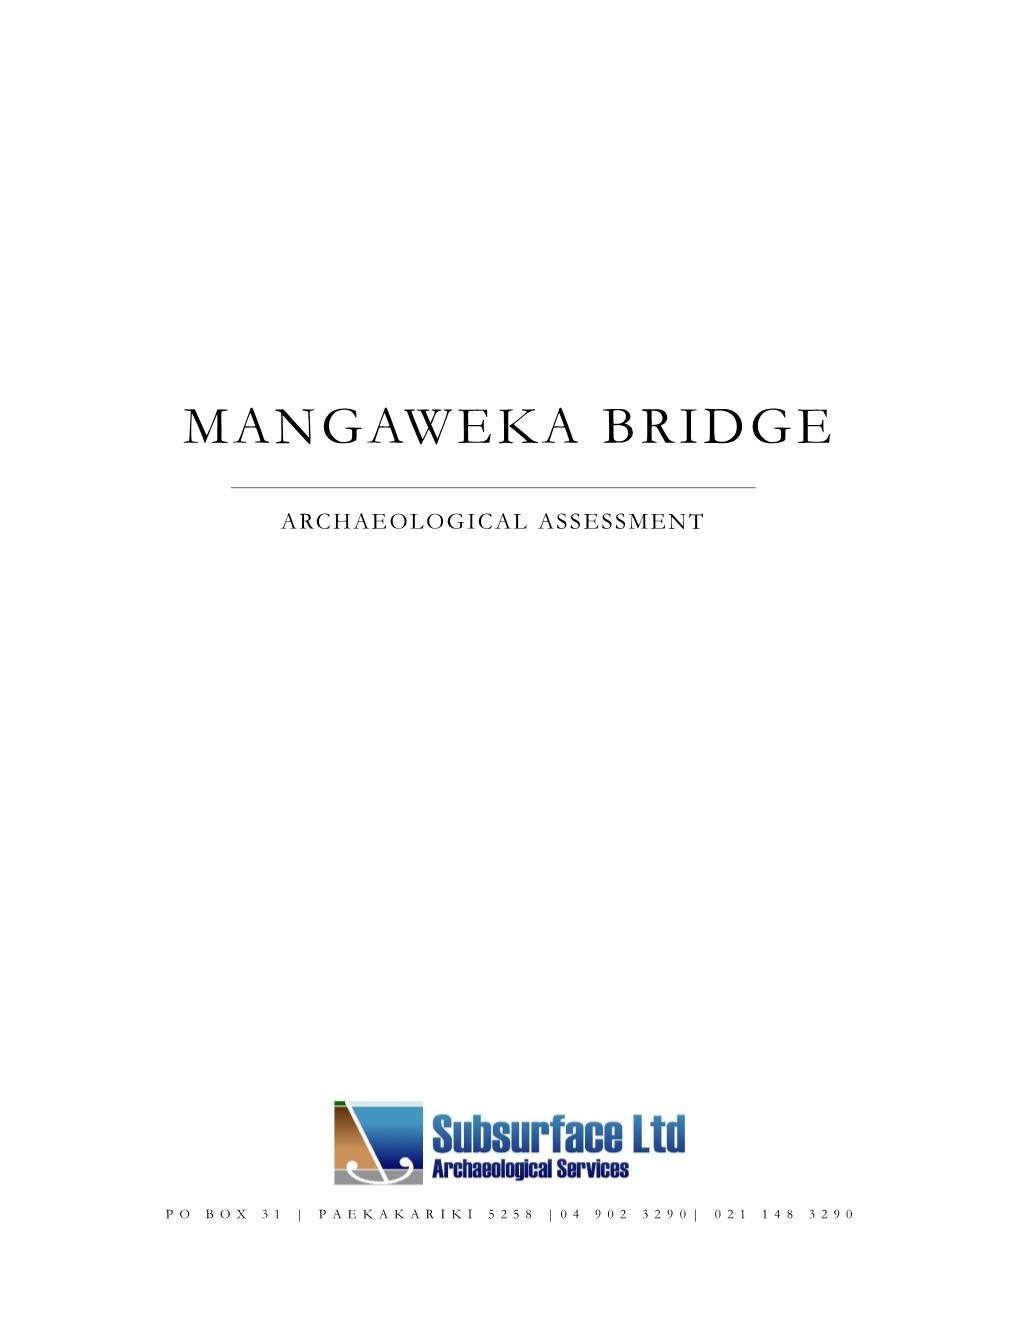 Mangaweka Bridge Archaeological Assessment